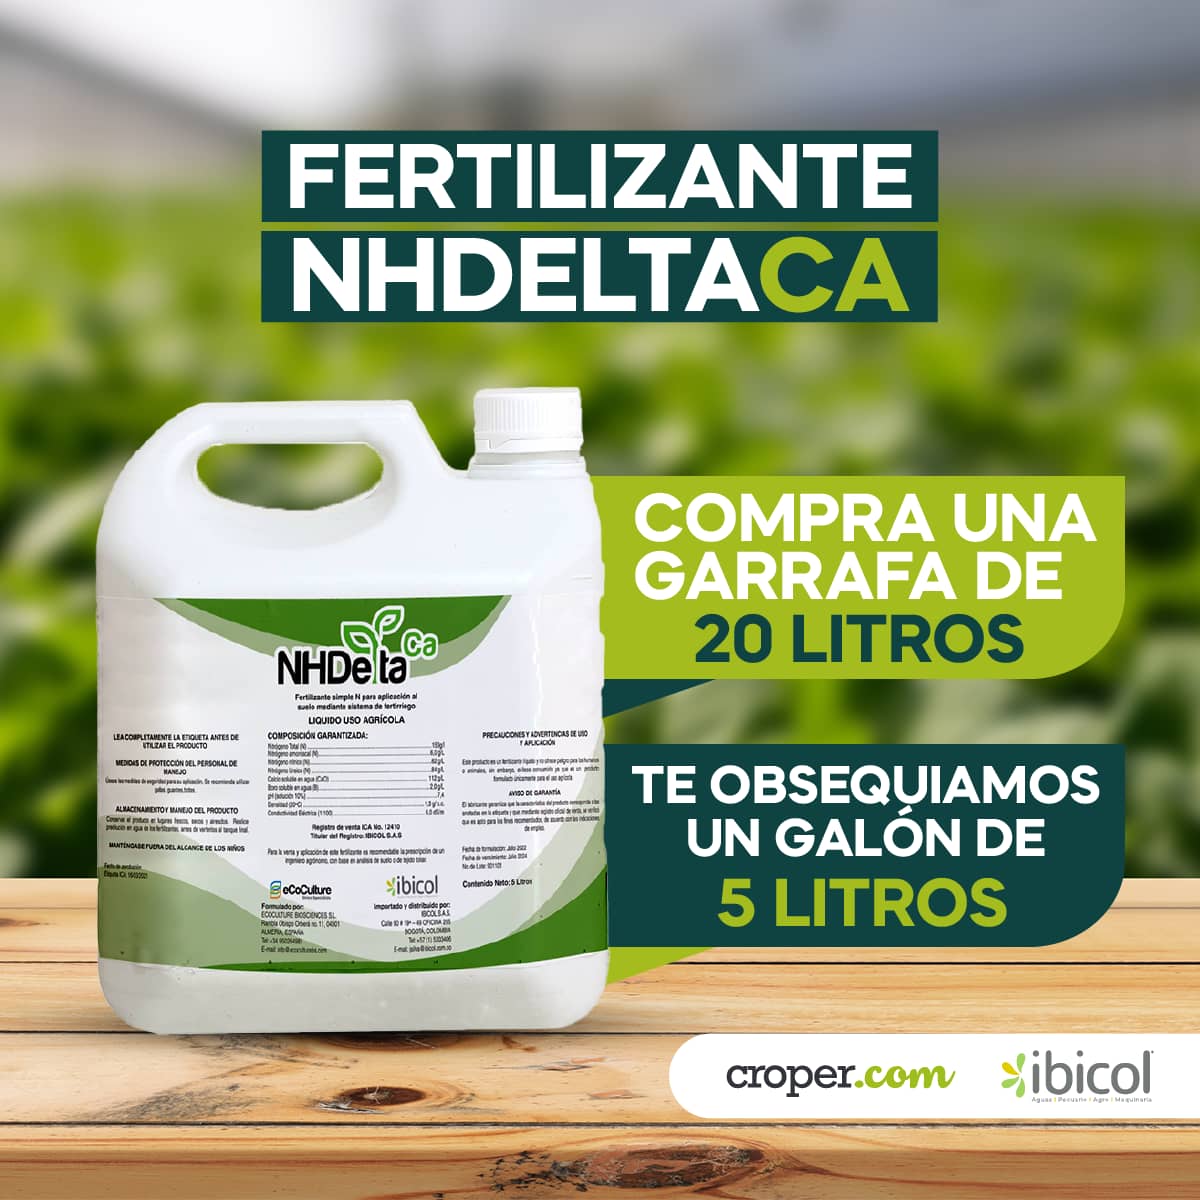 PROMO Fertilizante - NHDeltaCa x 20 Lt, GRATIS Galón x 5 lt